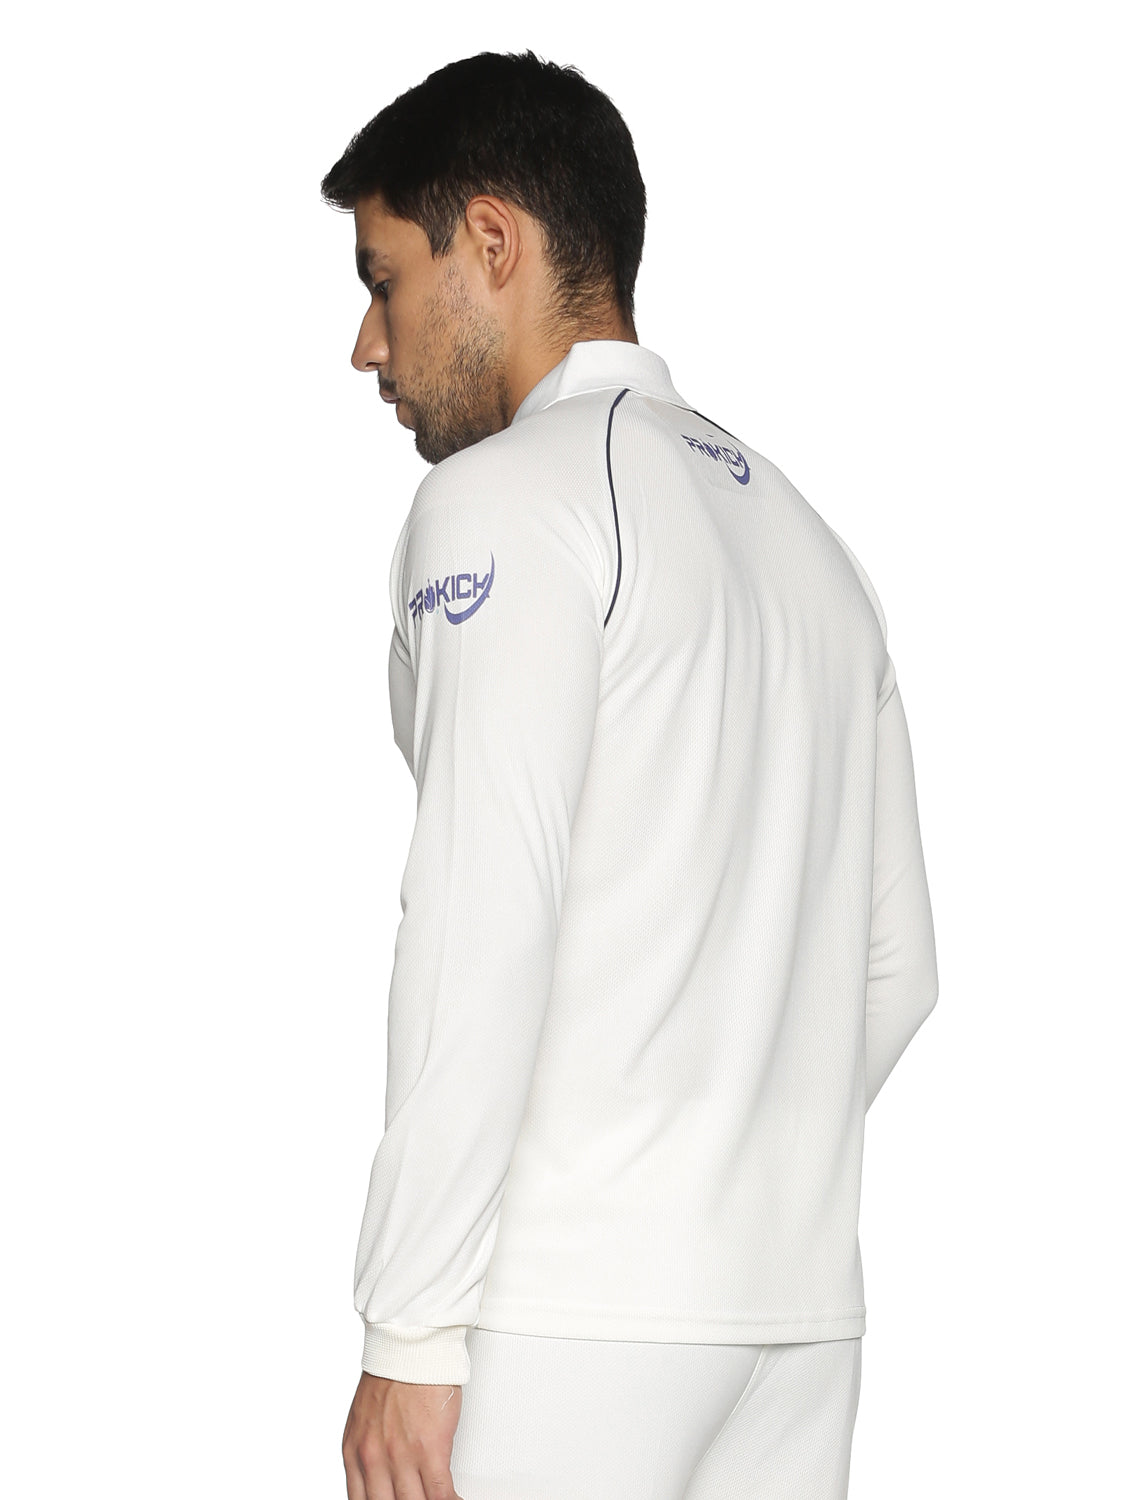 Prokick Cricket White Full Sleeve T-Shirt - Best Price online Prokicksports.com